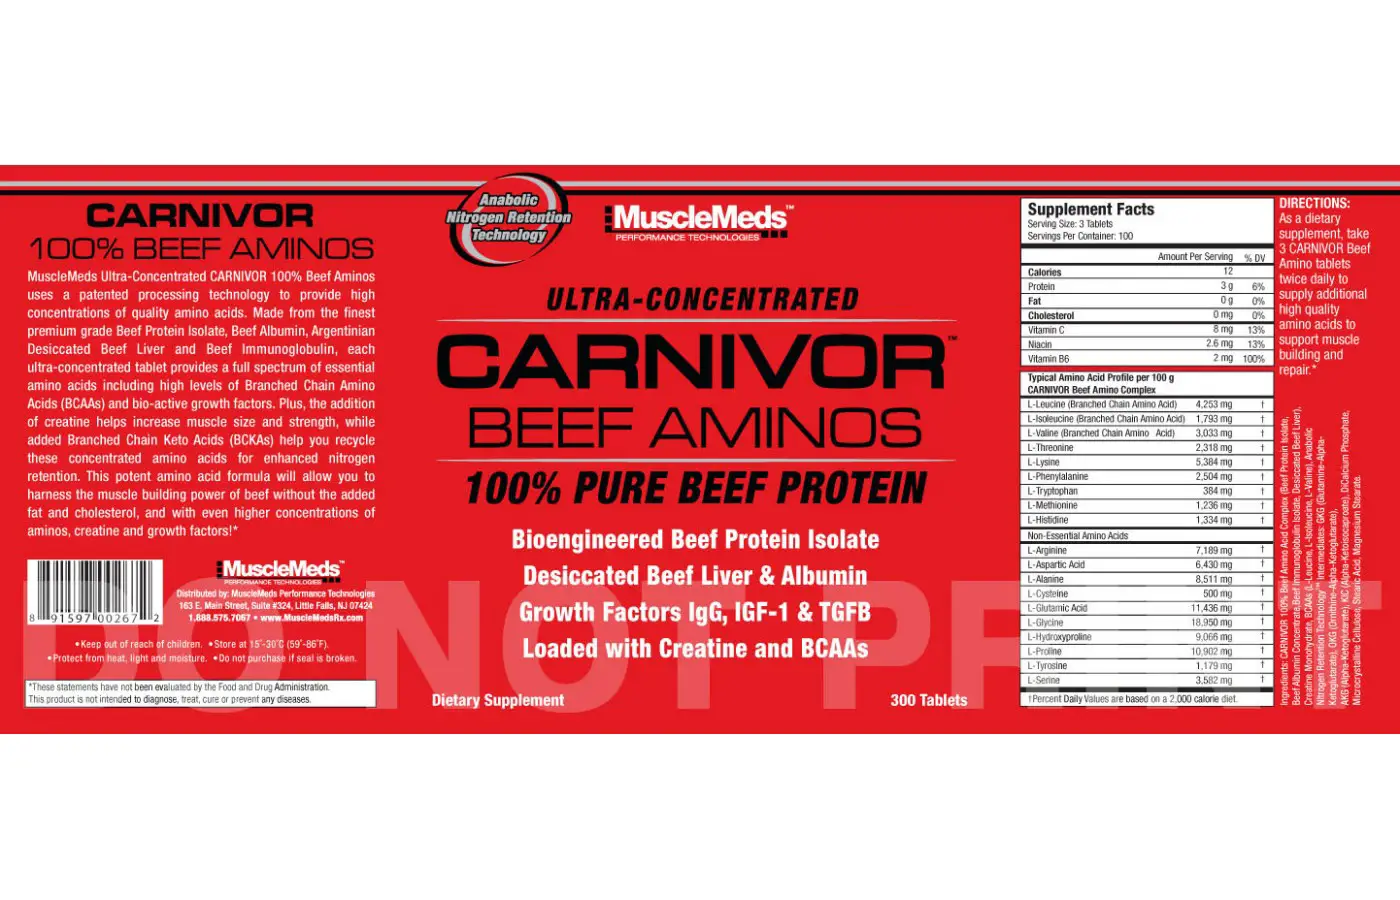 MuscleMeds Carnivor Beef Aminos label